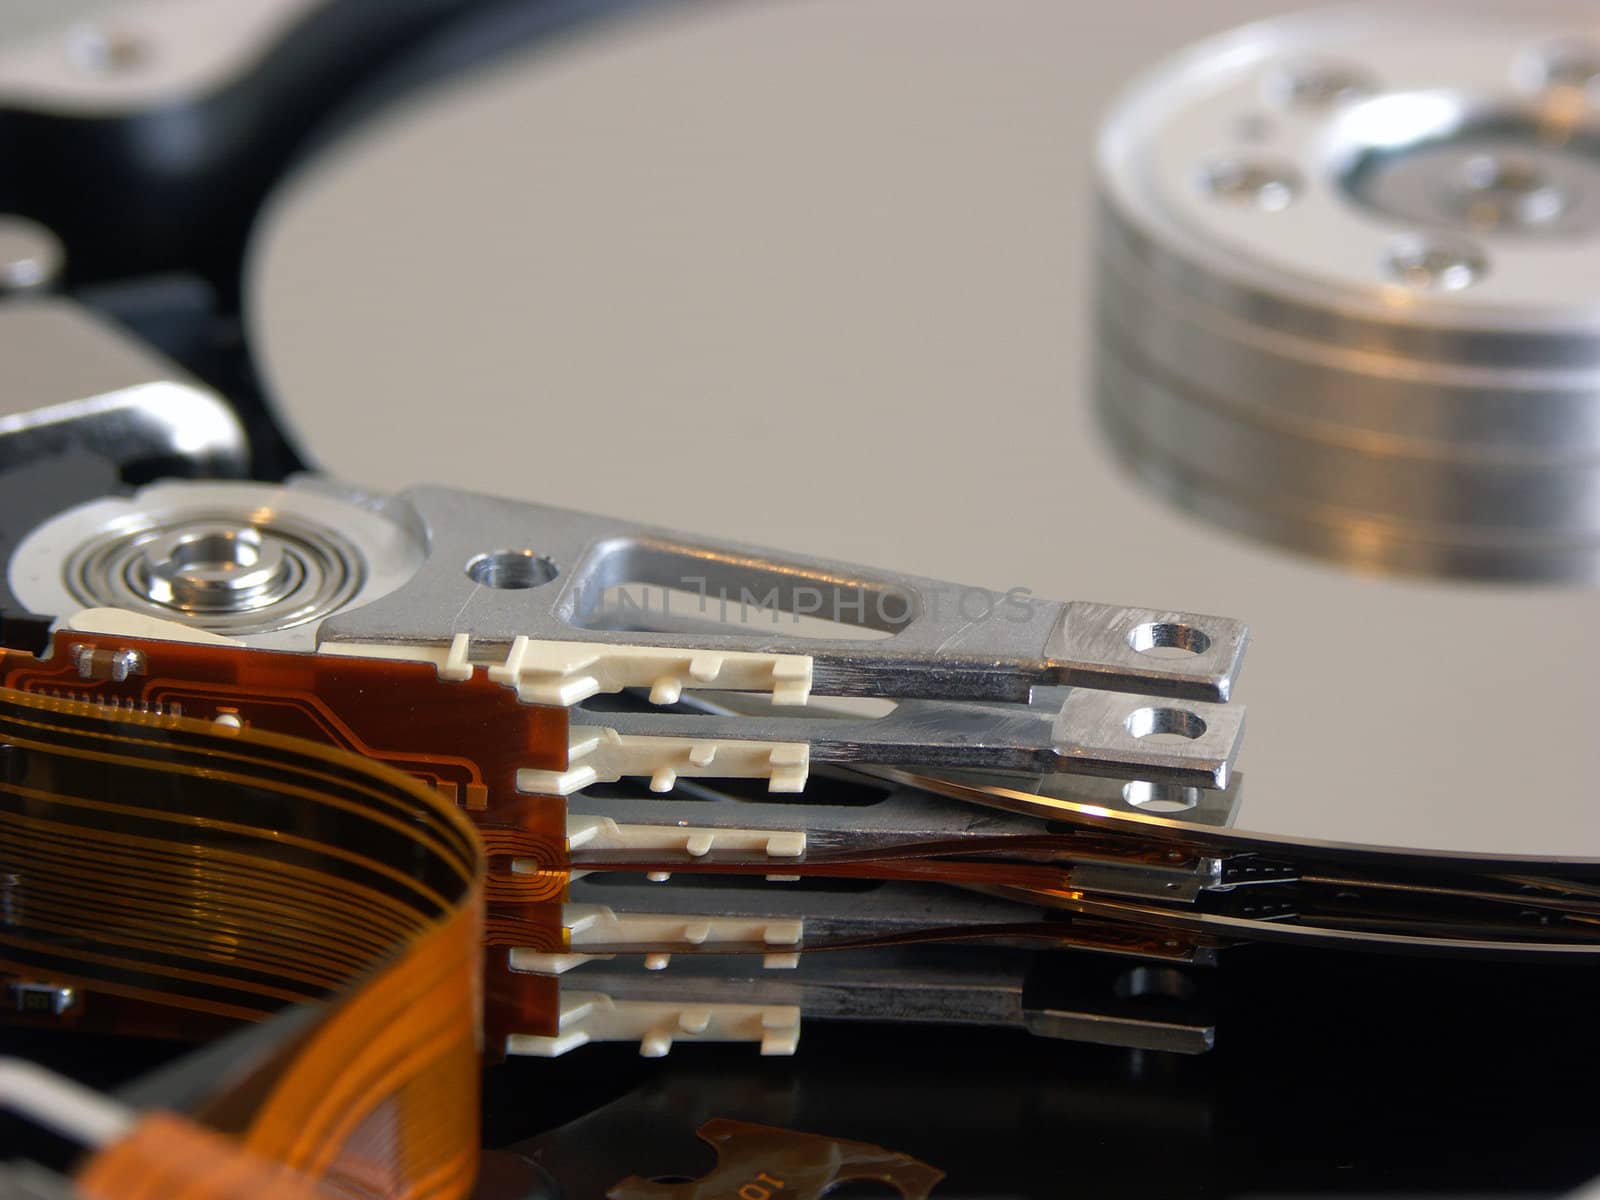 details of an internal computer hard drive by macintox